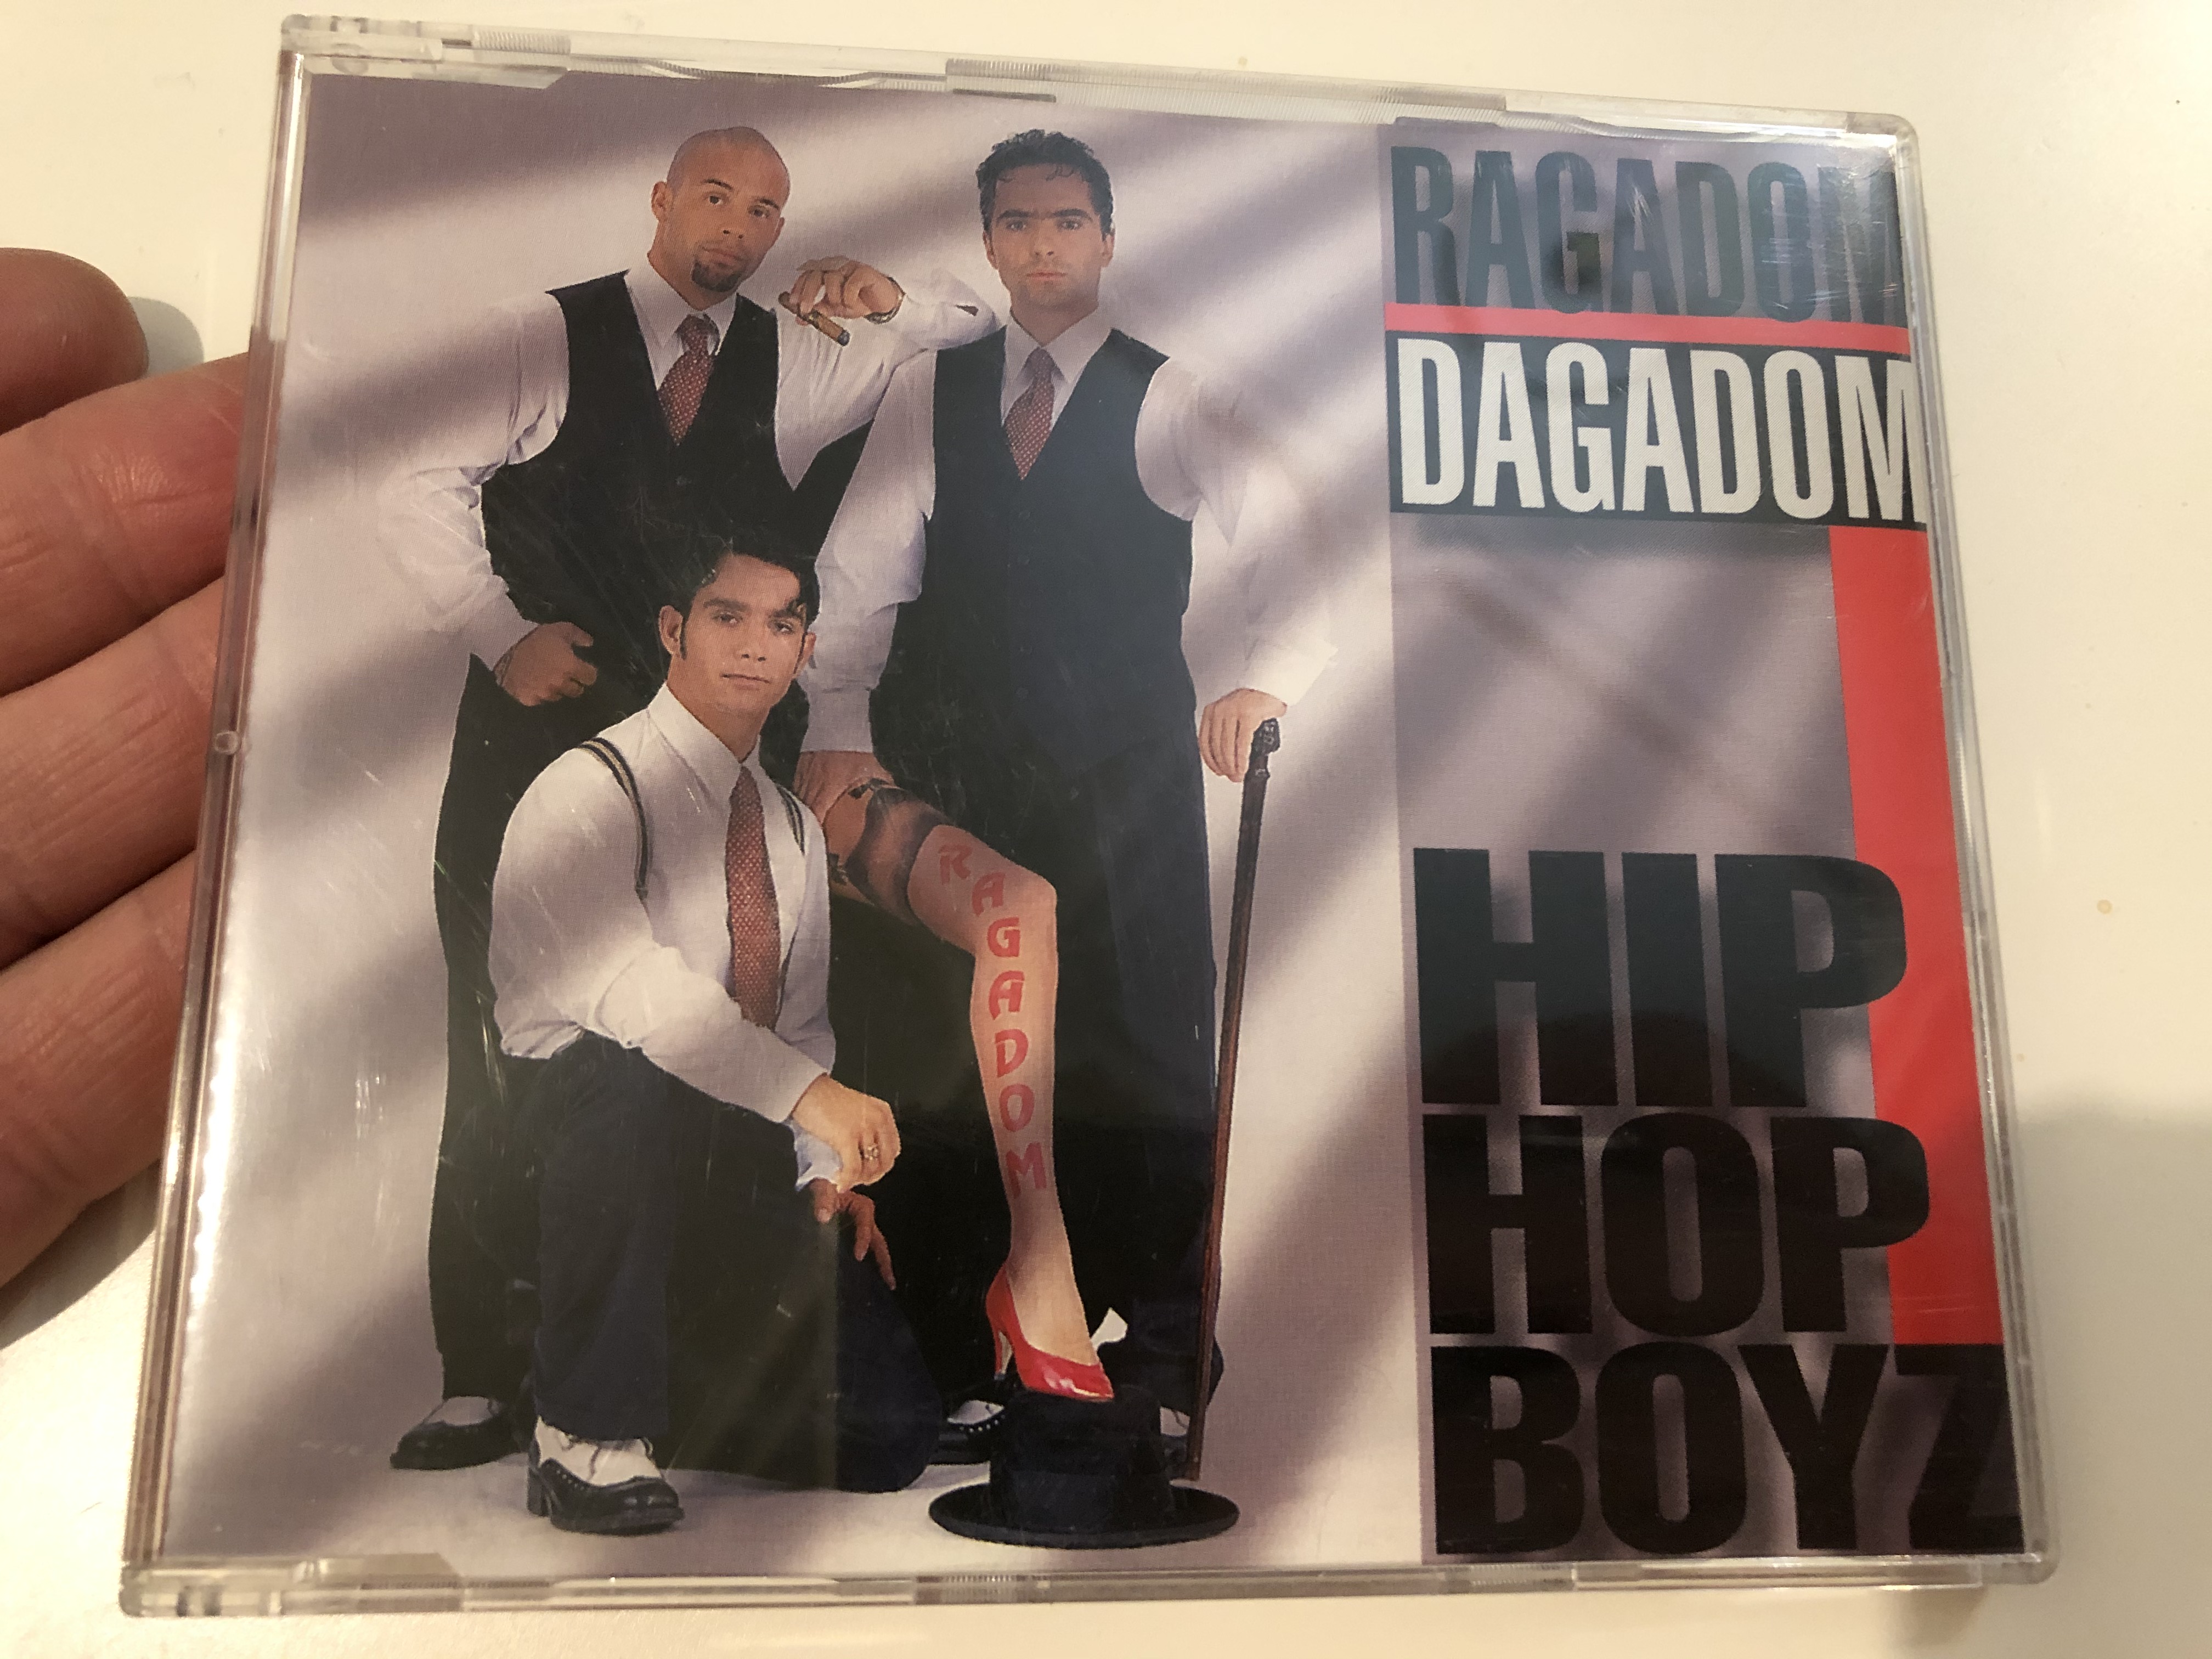 ragadom-dagadom-hip-hop-boyz-record-express-audio-cd-1996-rec-1-.jpg